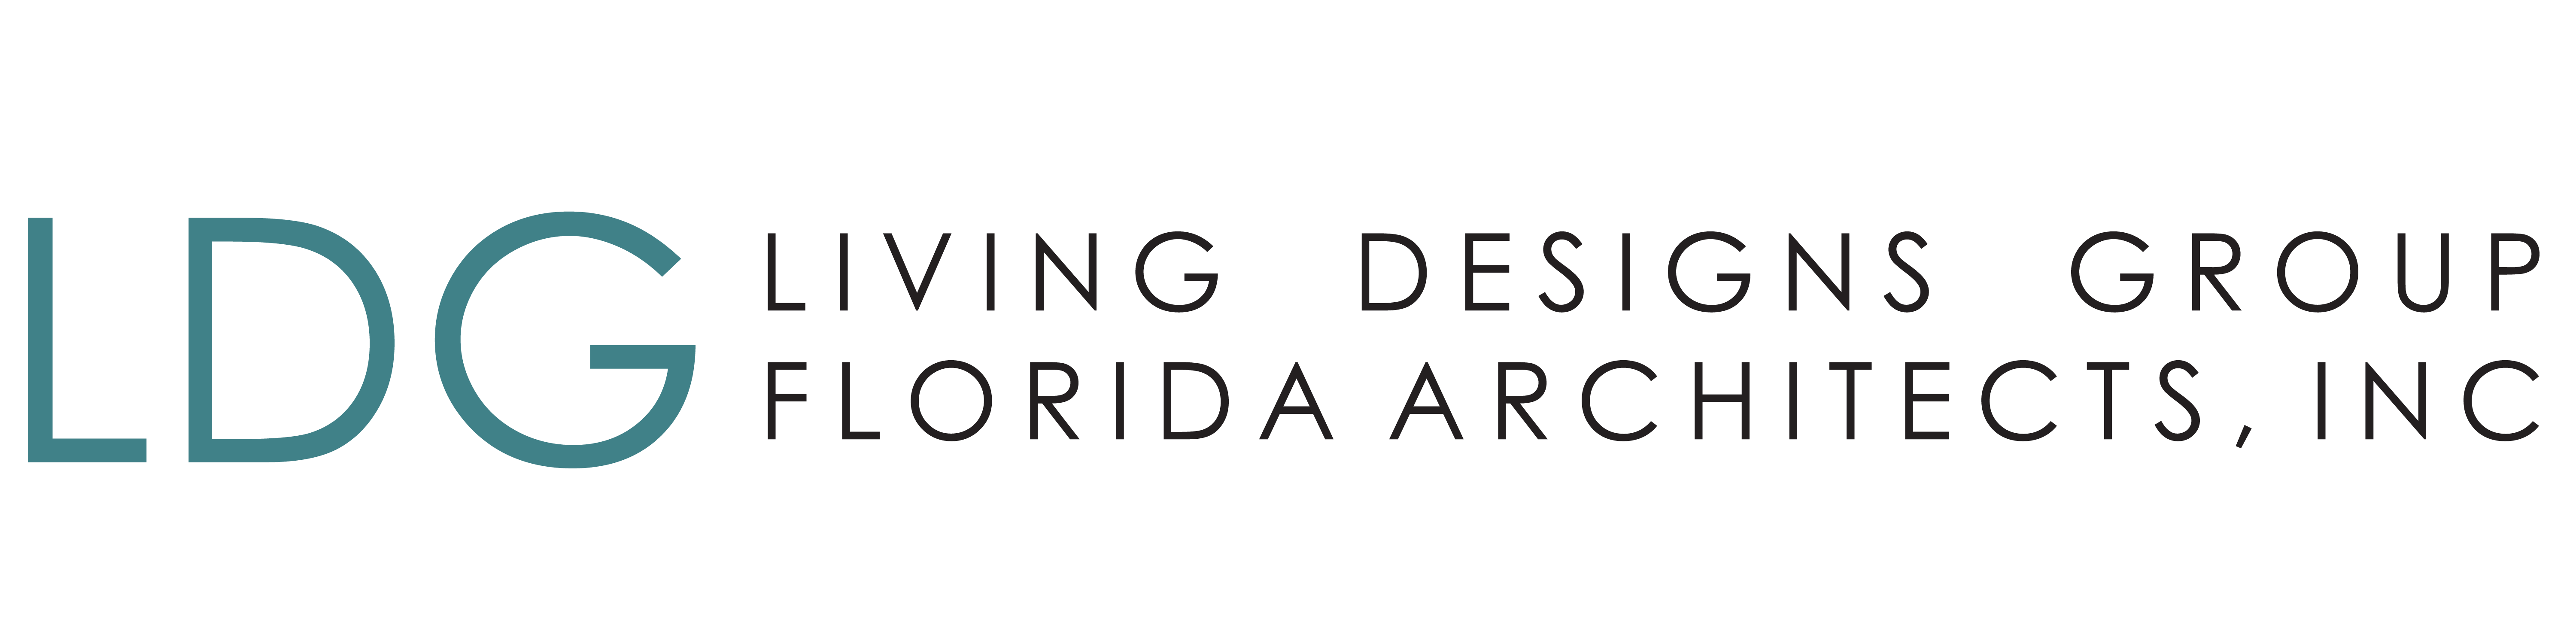 LDG Florida Architects, INC